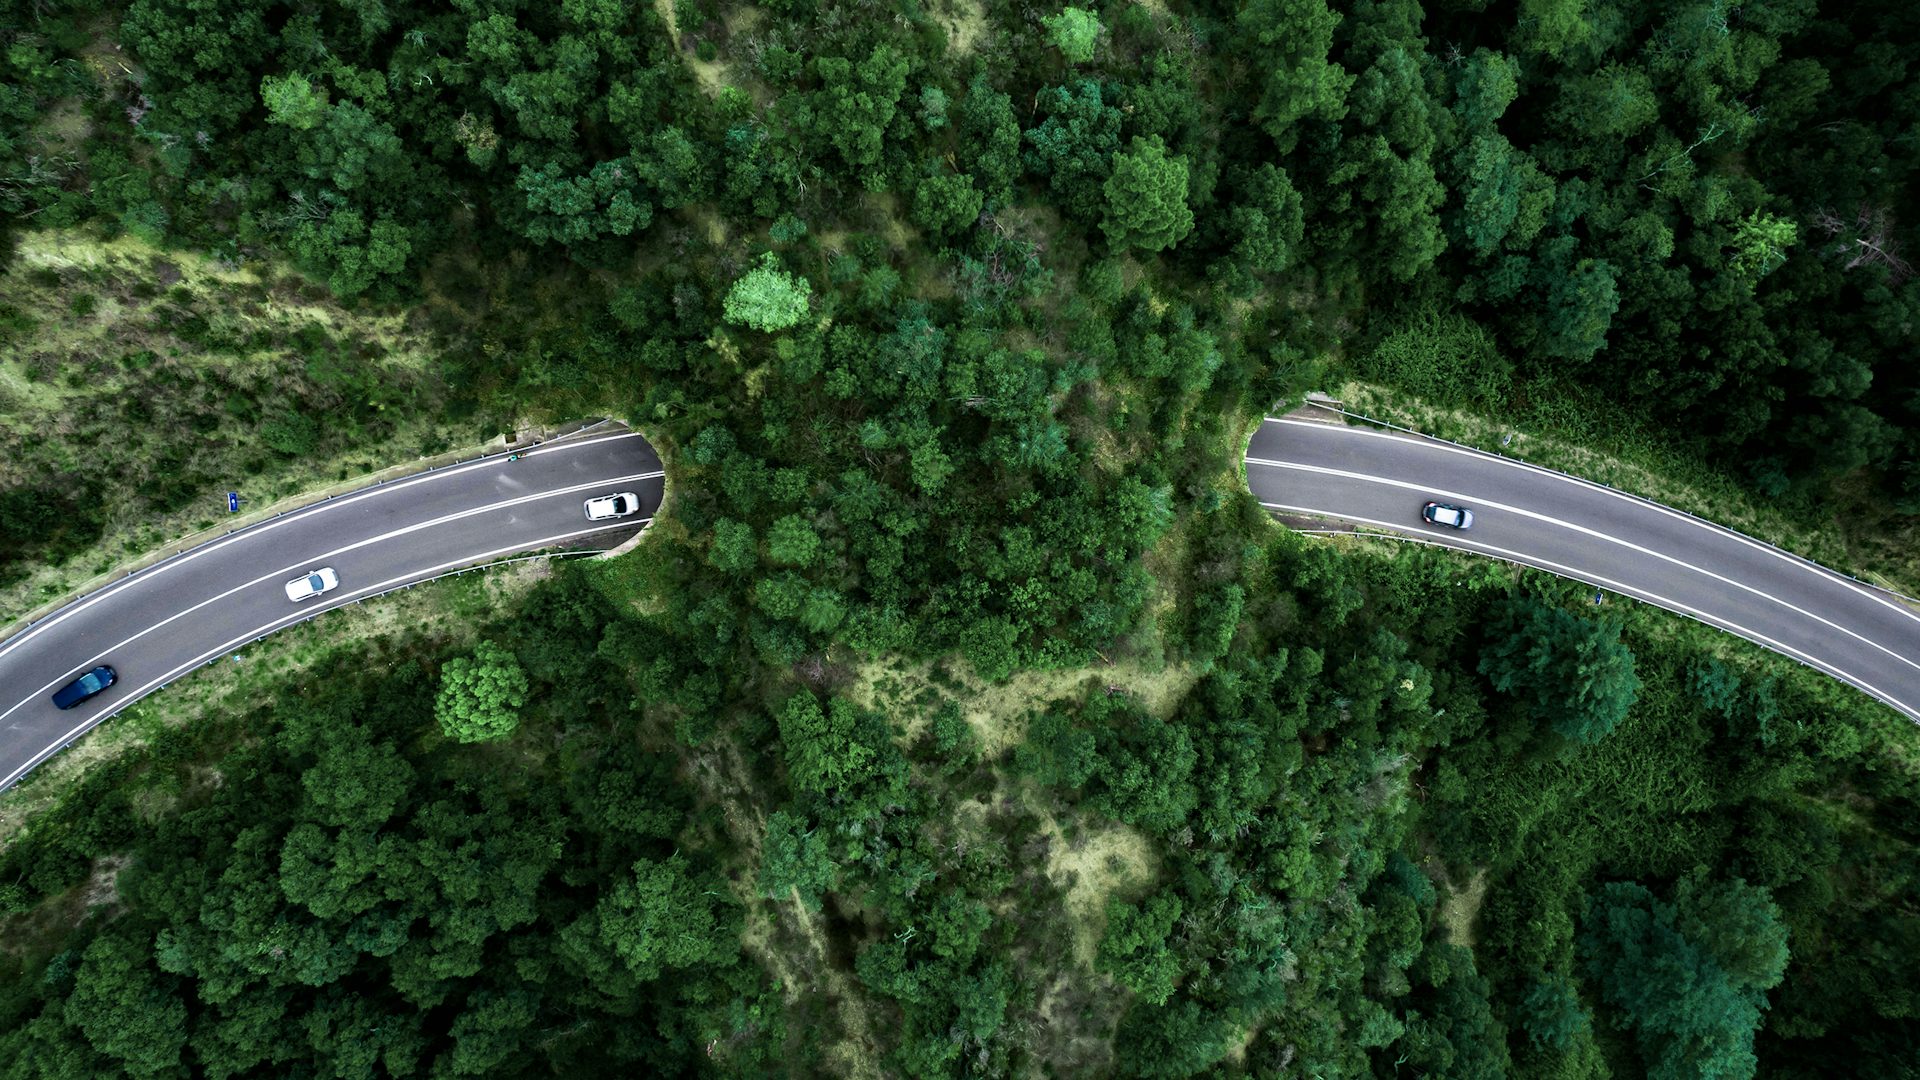 Vista aerea di una strada curva immersa in un paesaggio verde.